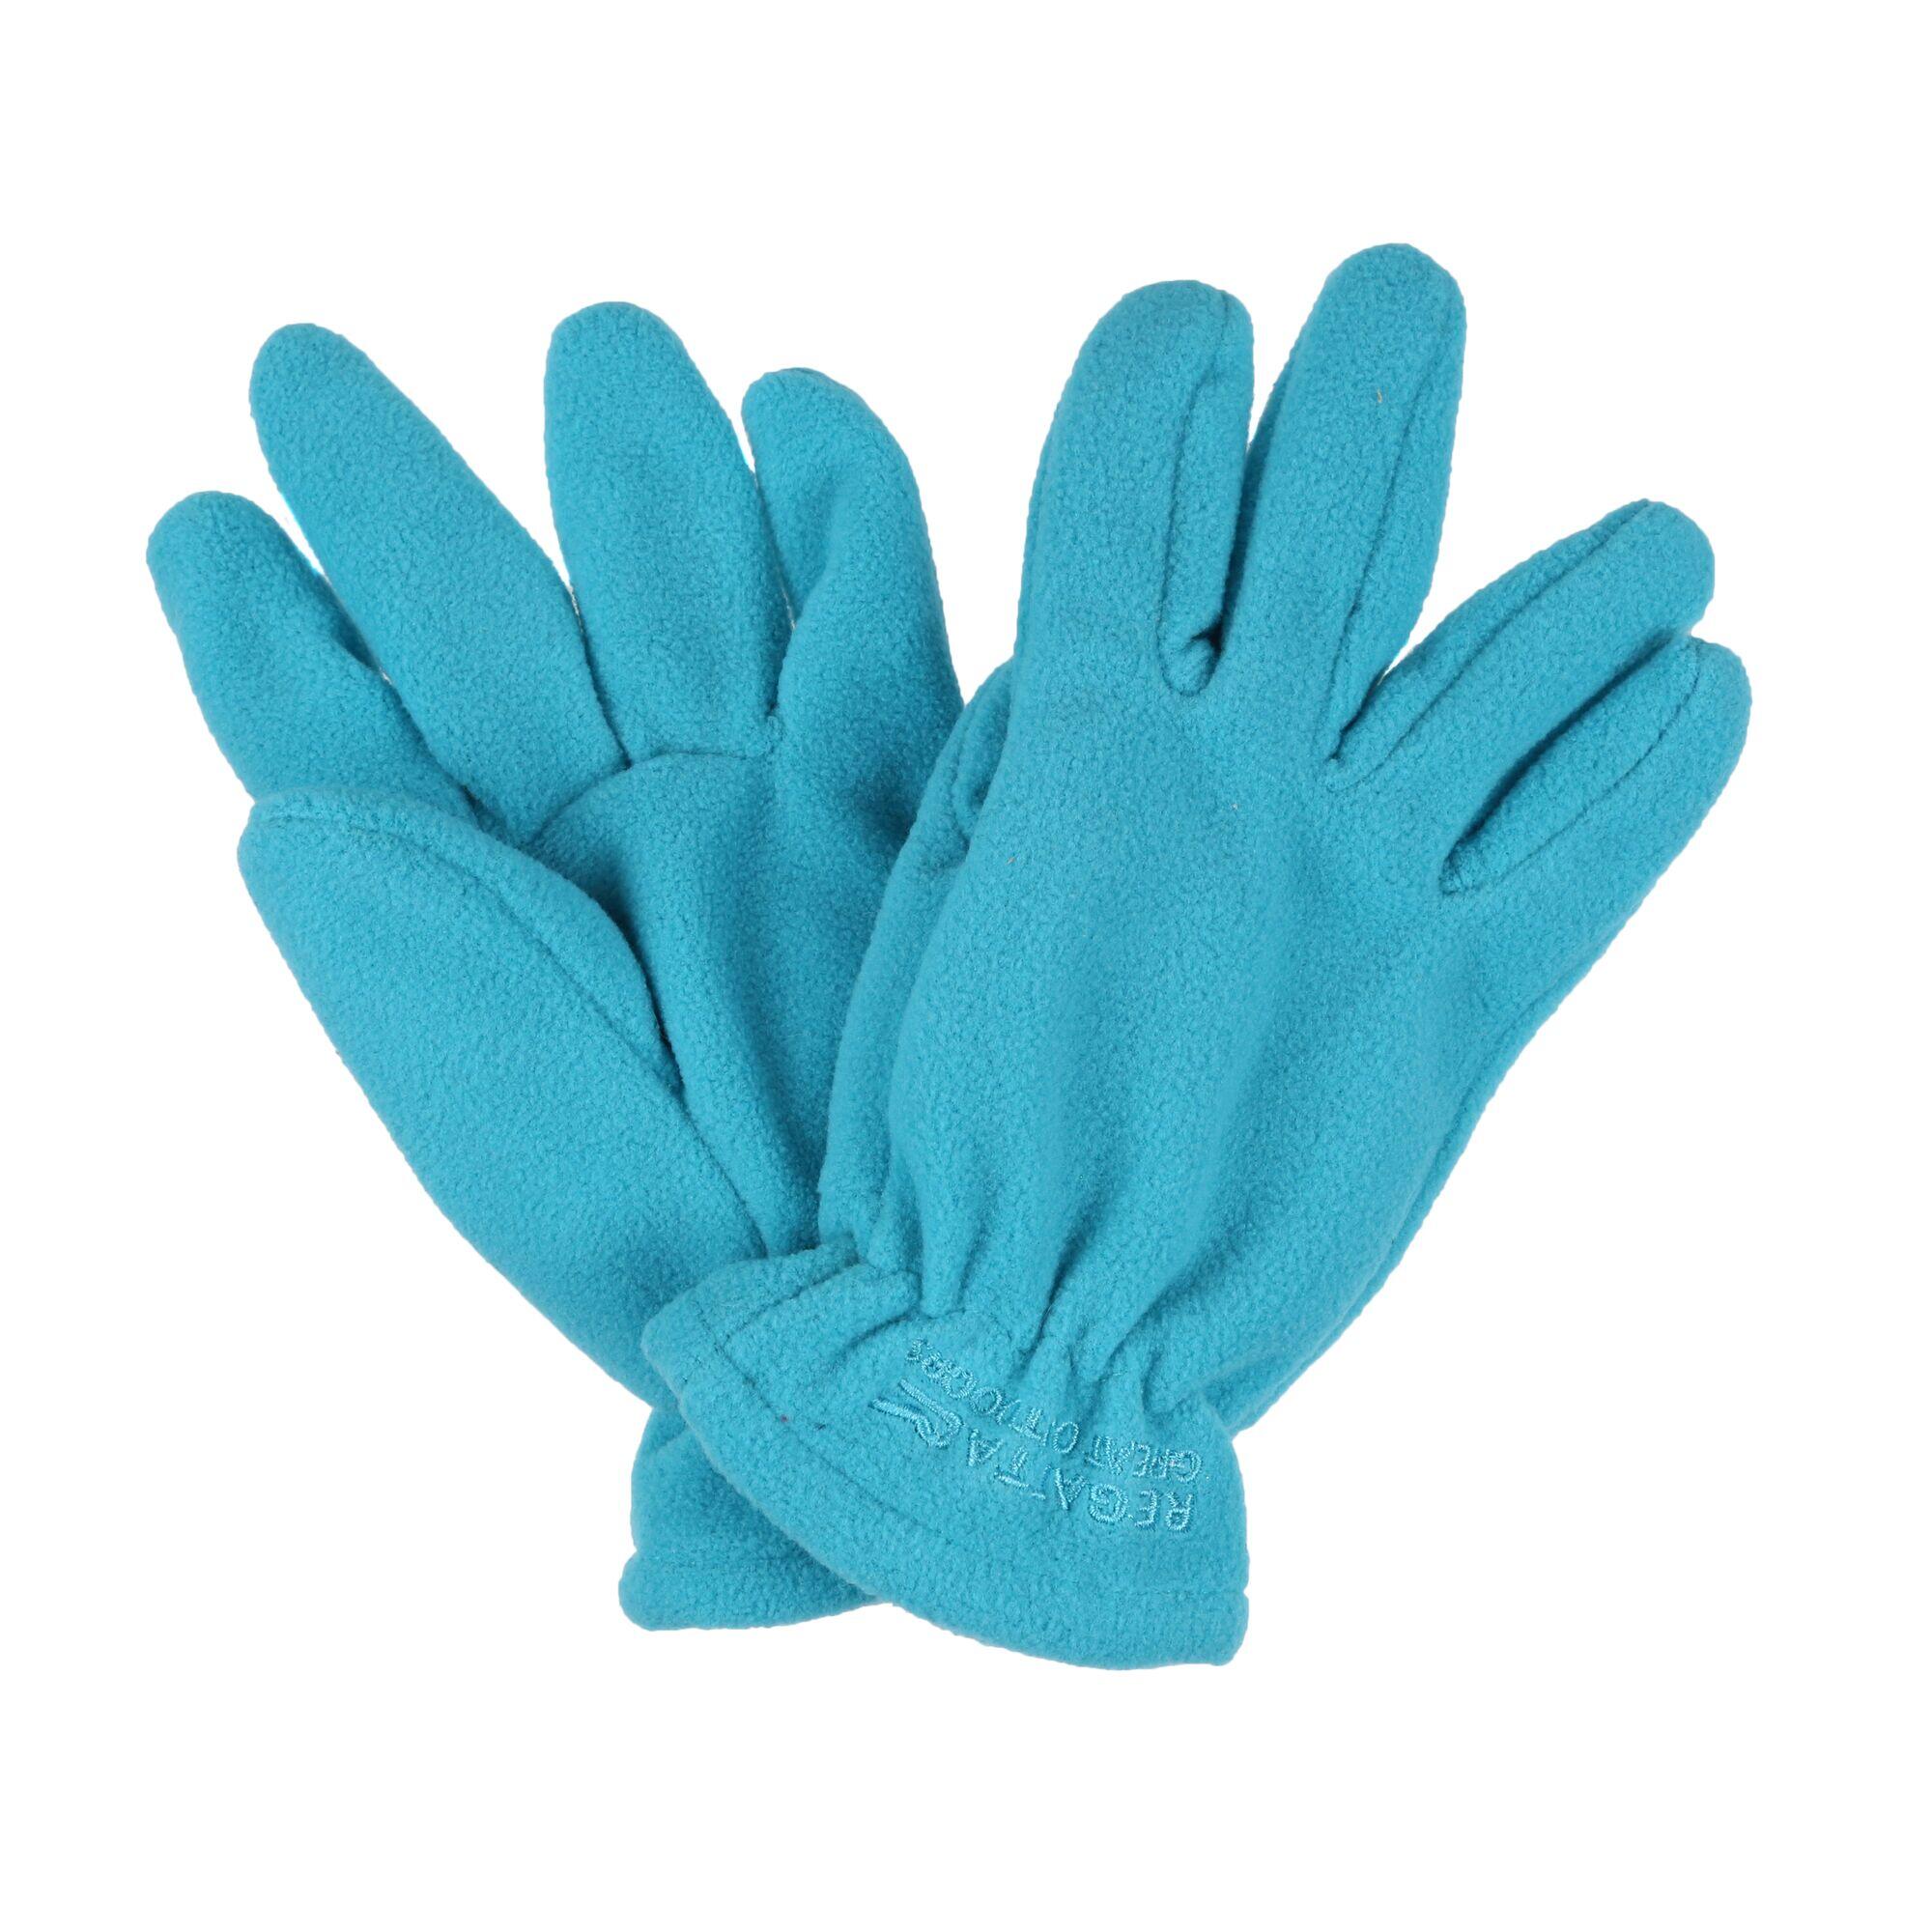 gants de randonnee regatta turquoise - enfant 4 - 14 ans - regatta